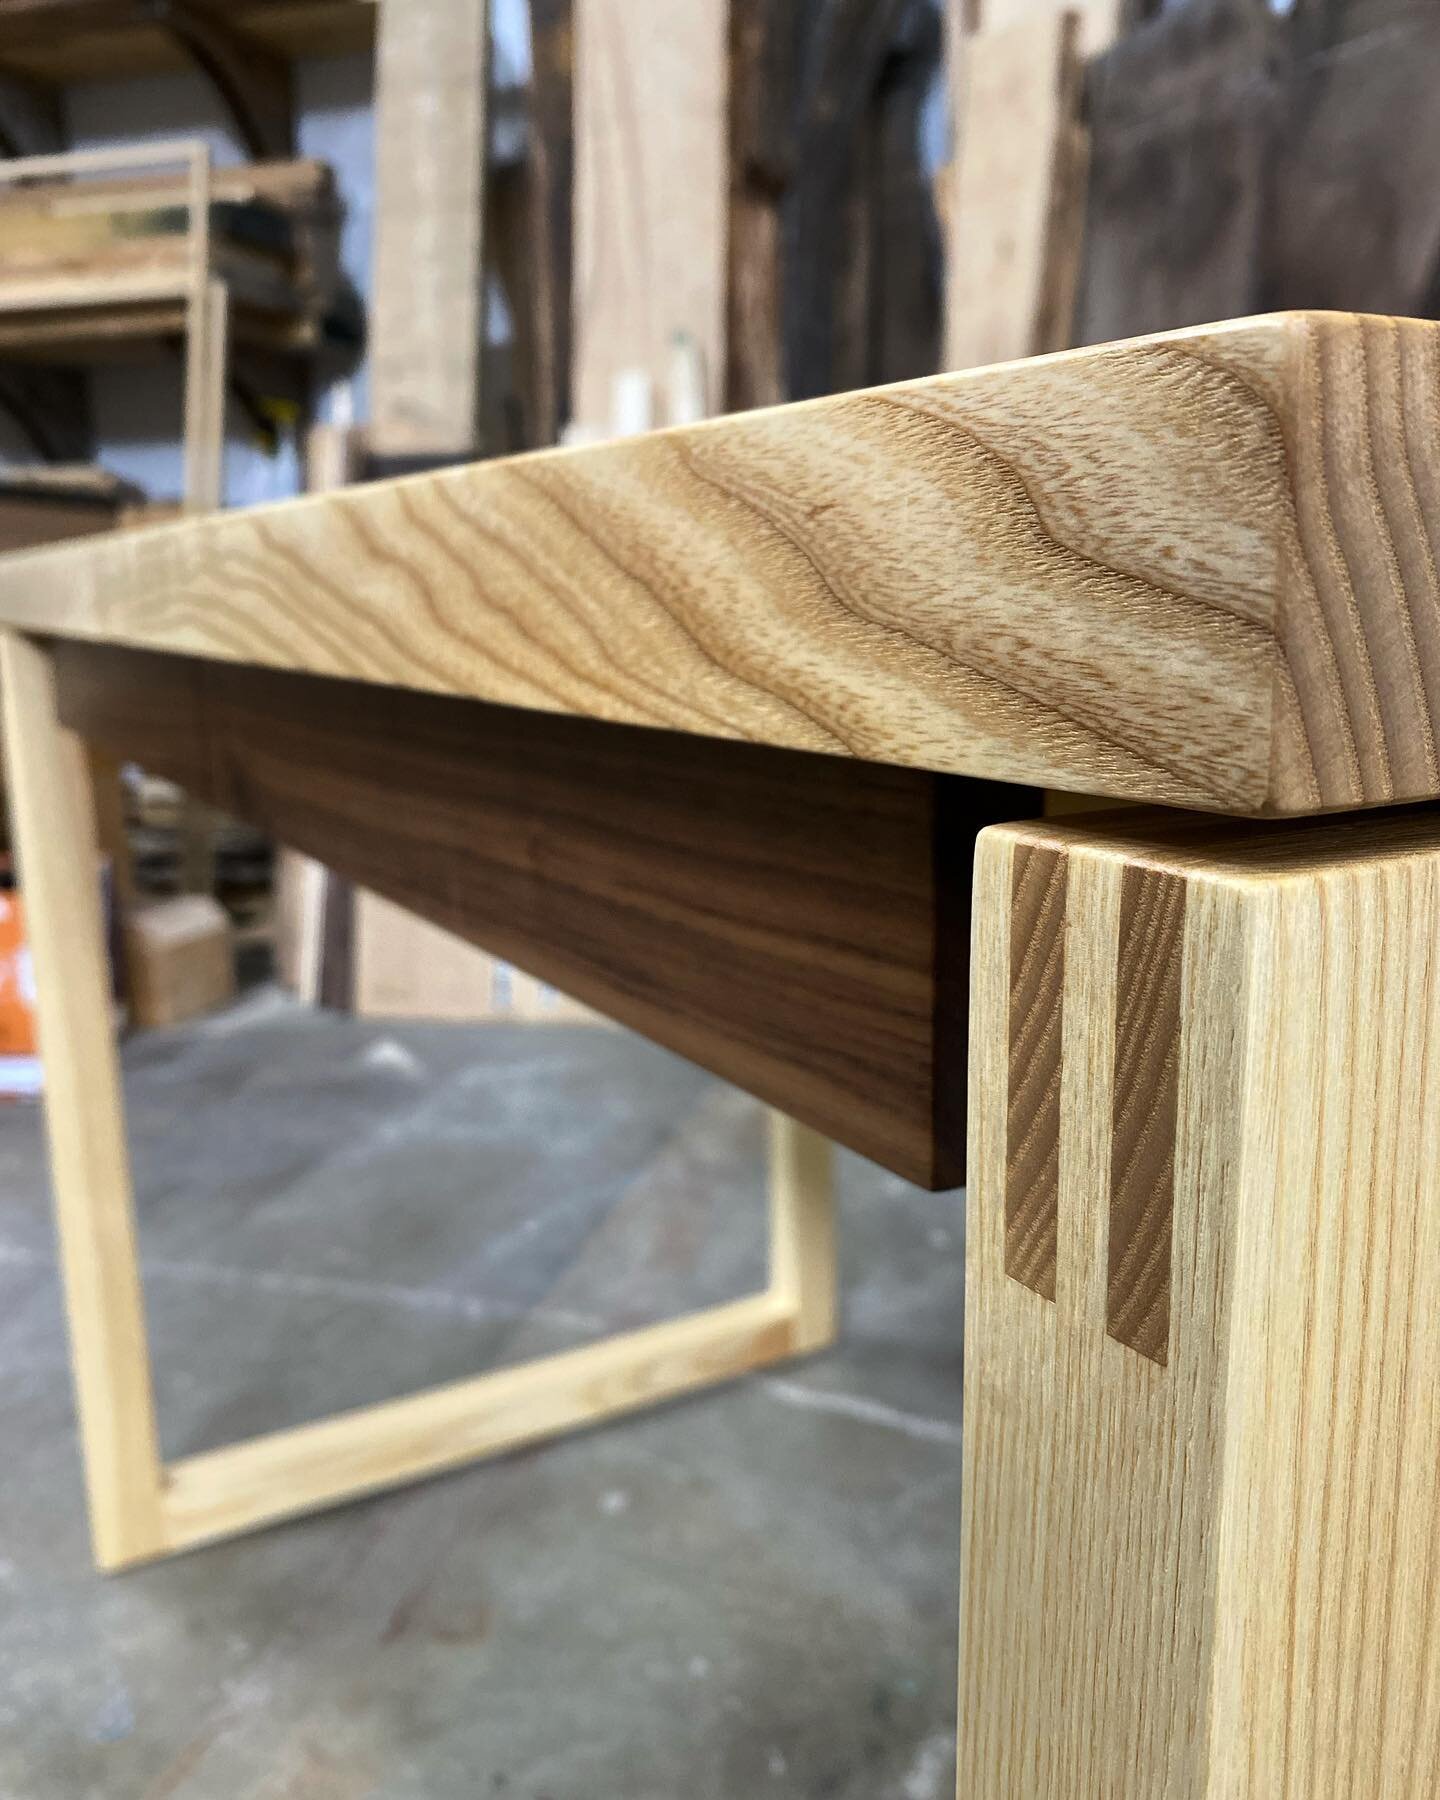 Ash + Walnut
.
#desk #customdesk #customfurniture #woodisgood